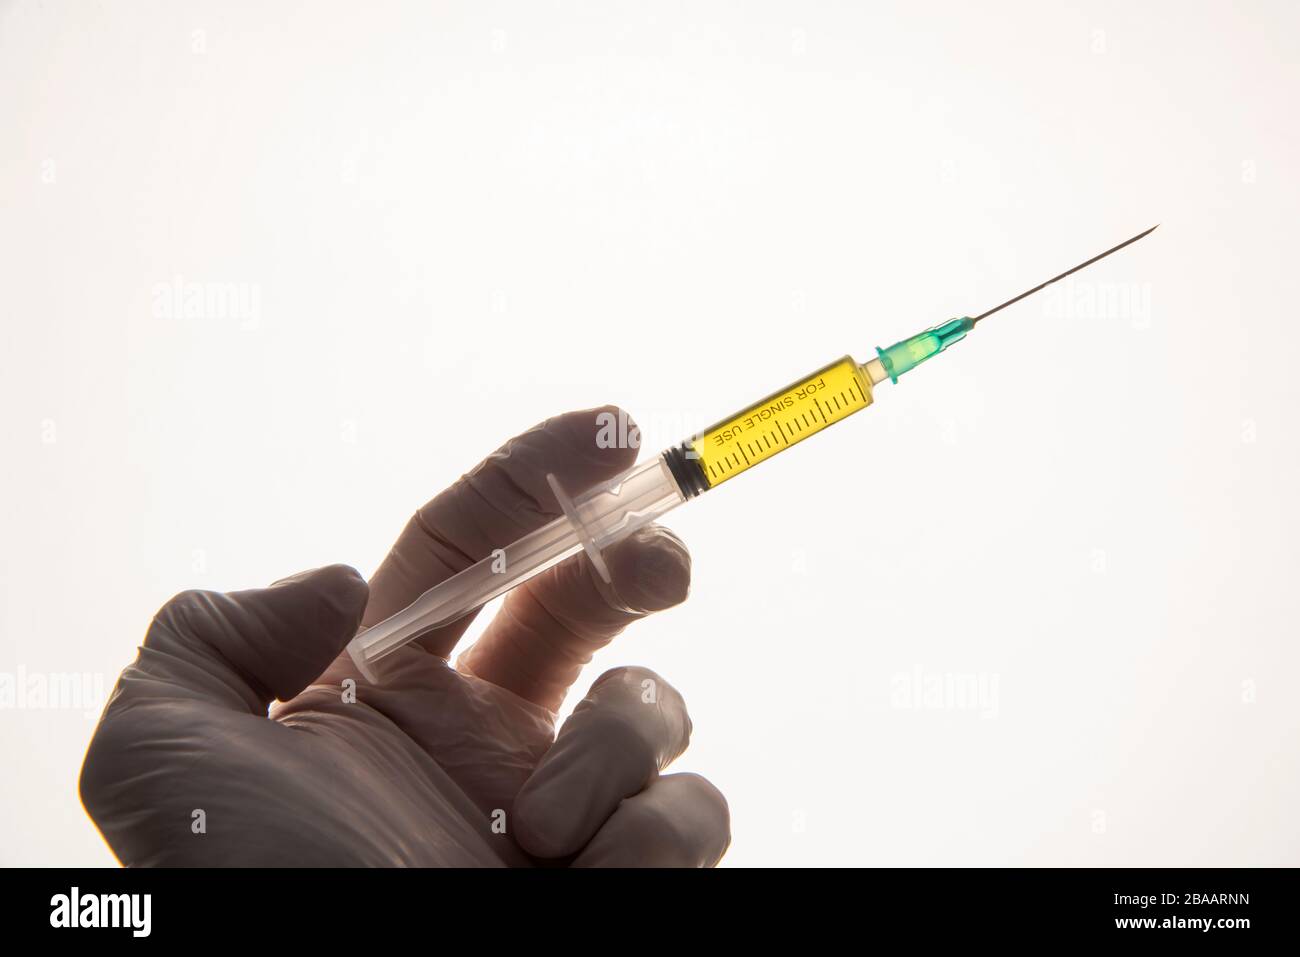 corona virus vaccine syringe on hand with blood sample Stock Photo